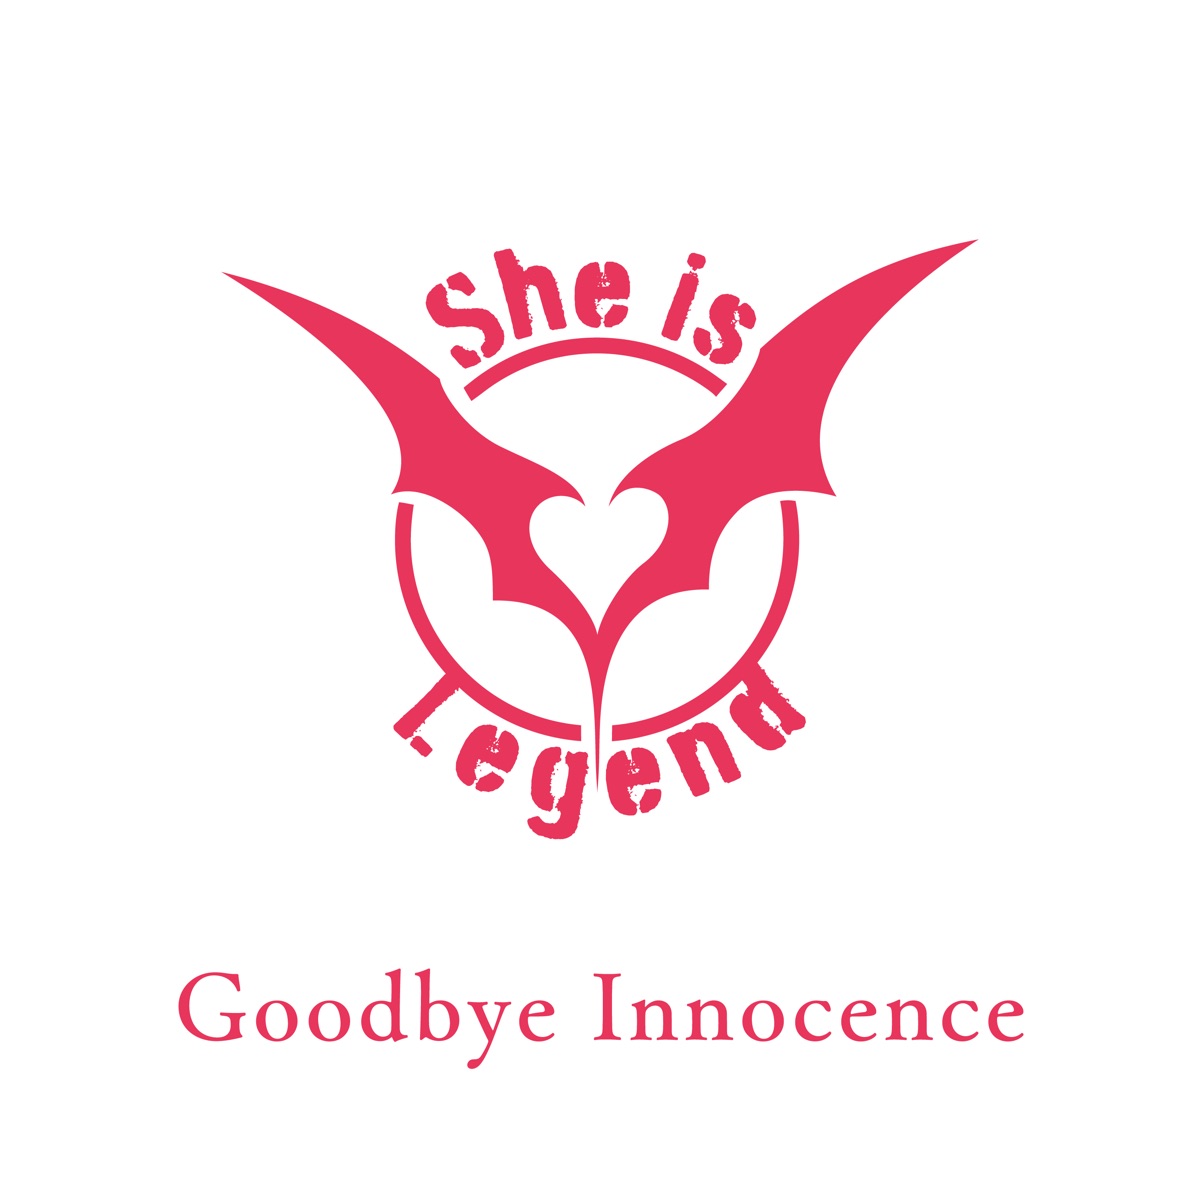 Cover art for『She is Legend - Goodbye Innocence』from the release『Goodbye Innocence』